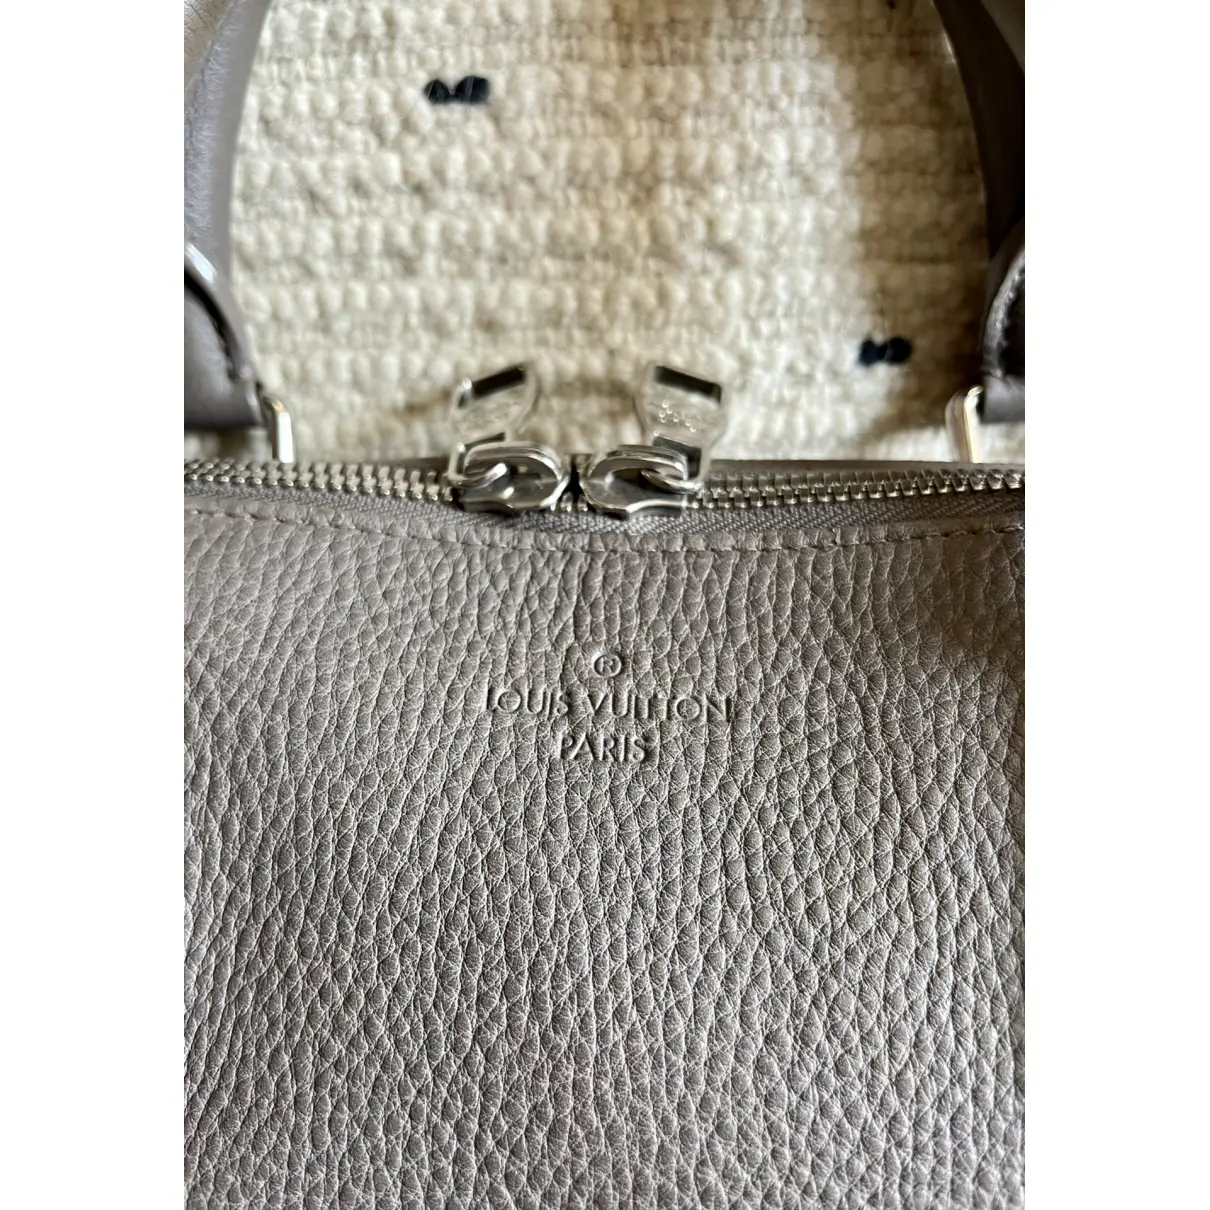 Buy Louis Vuitton Naxos leather satchel online